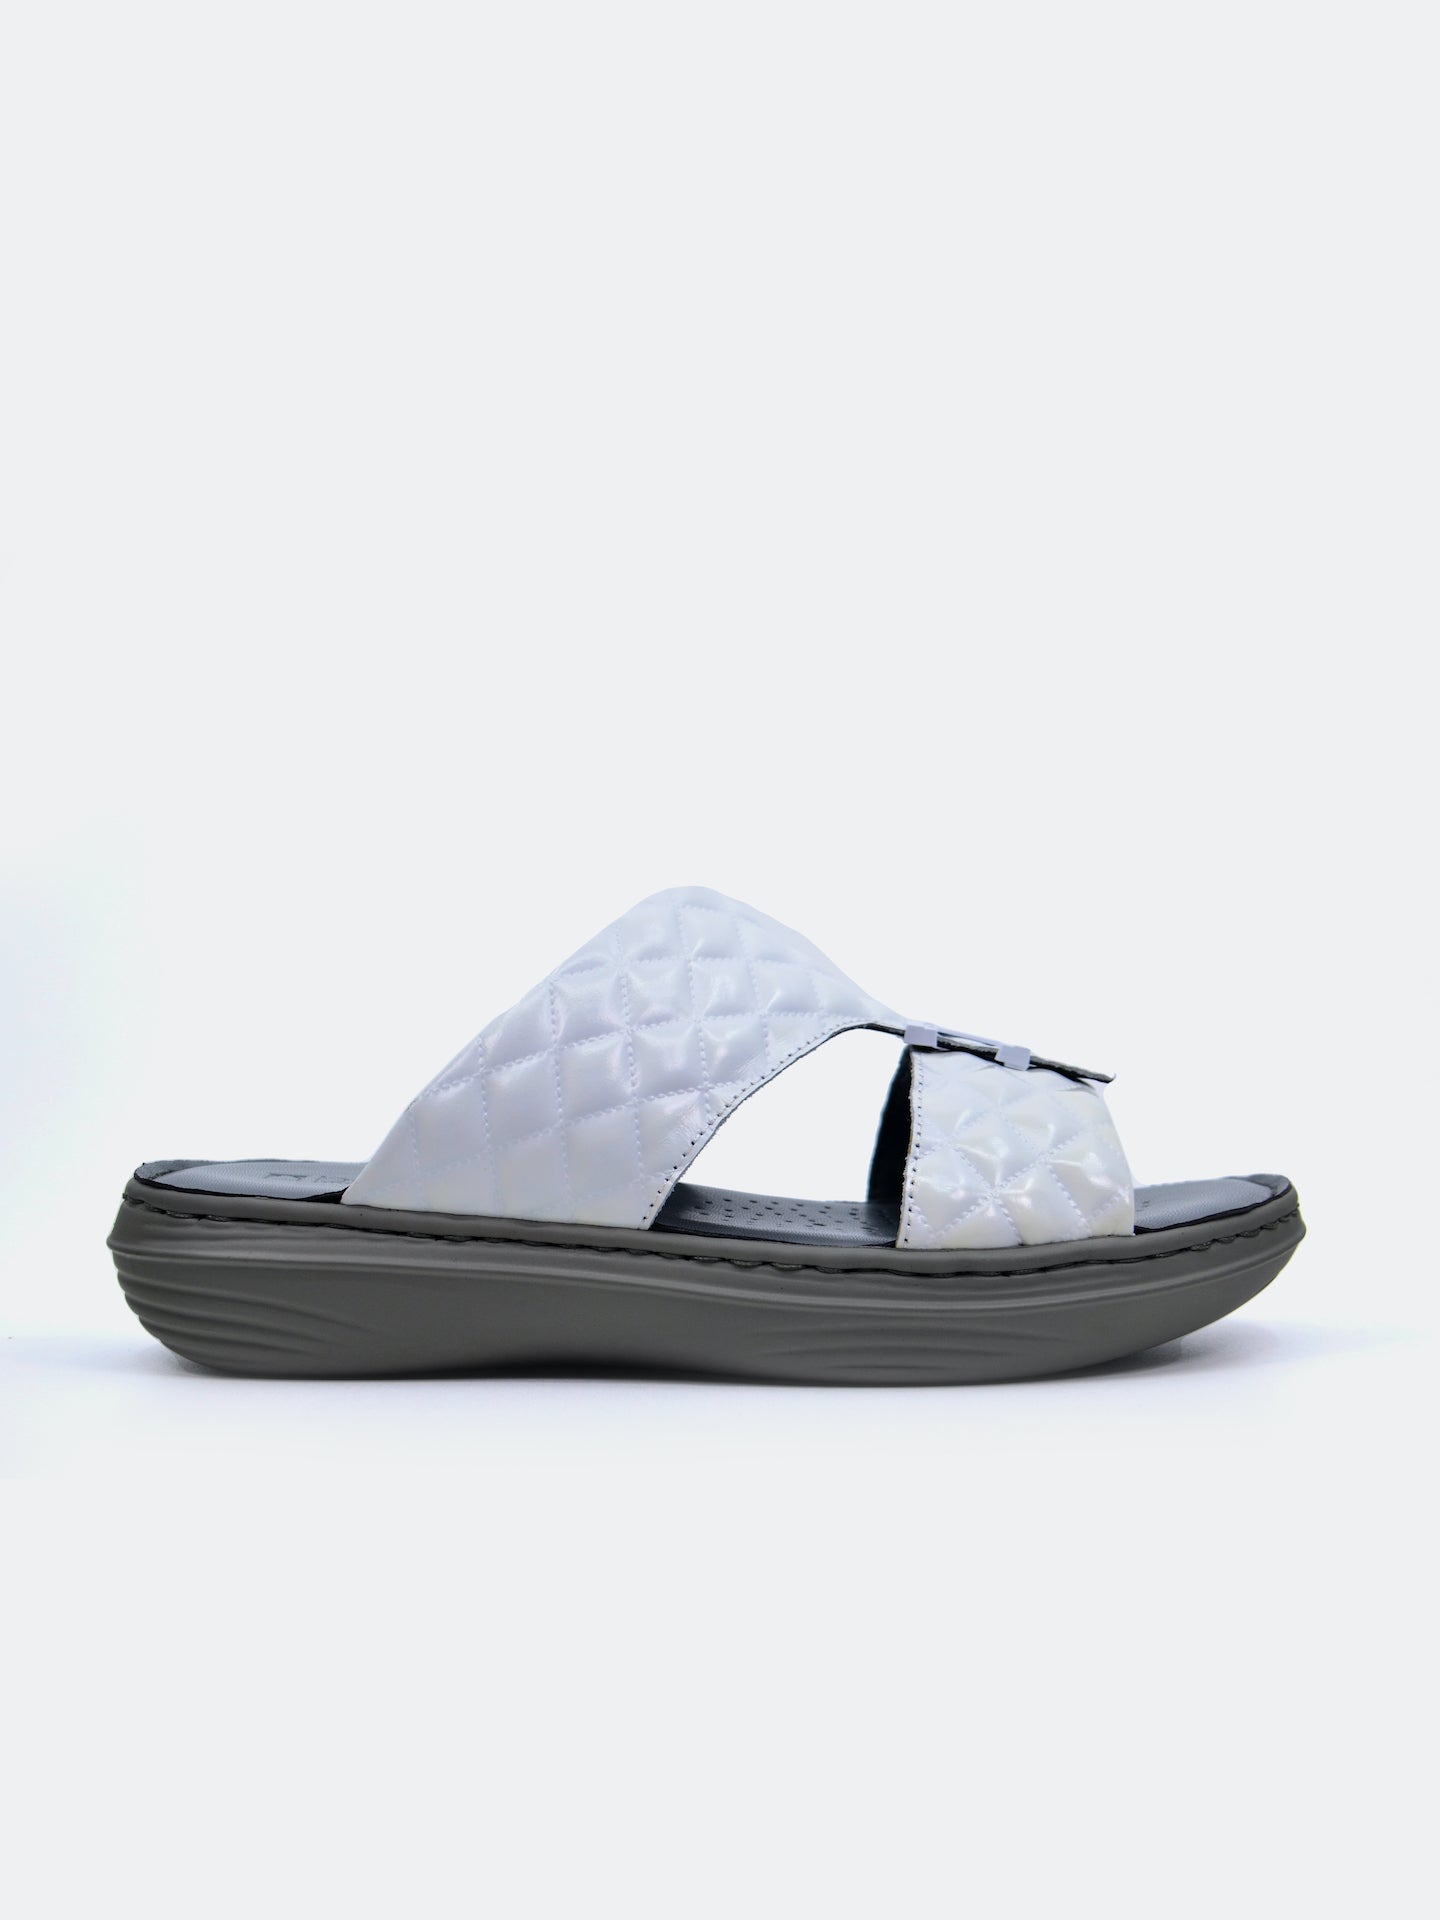 Barjeel Uno 21410-4 Men's Arabic Sandals #color_White